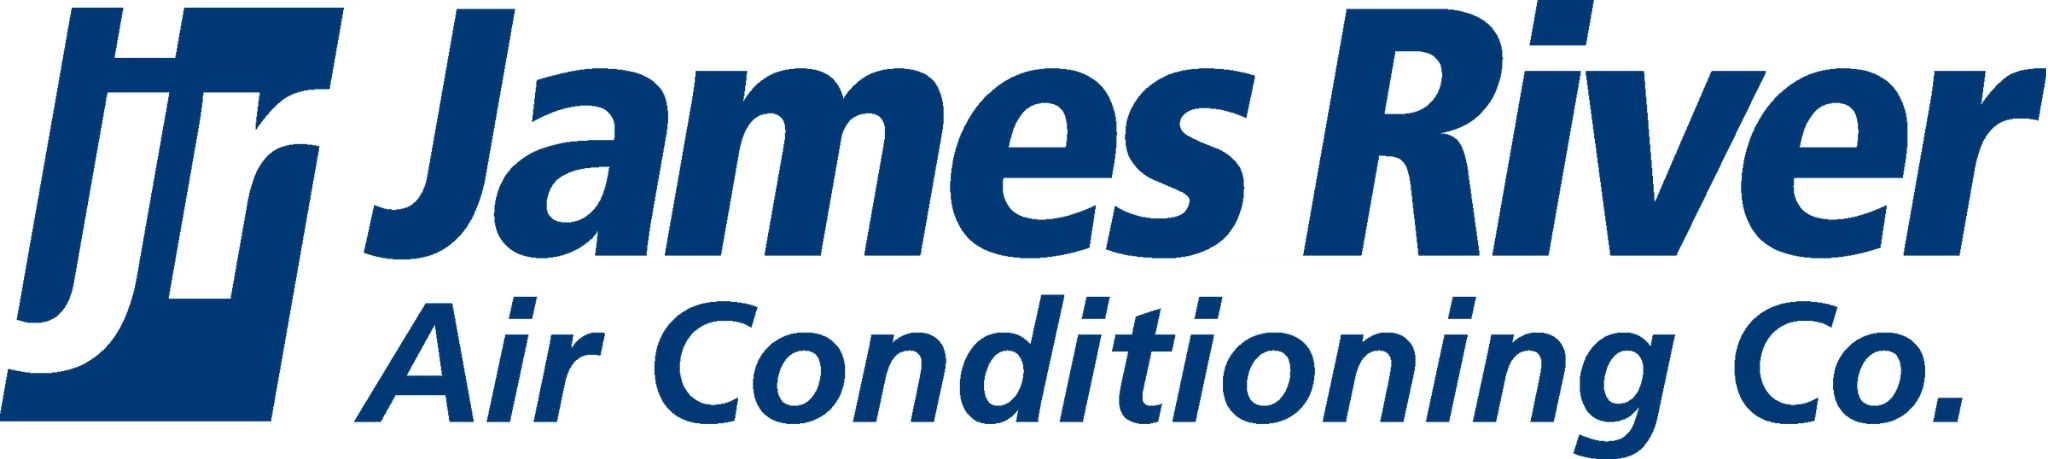 James River Air Conditioning Company Logo